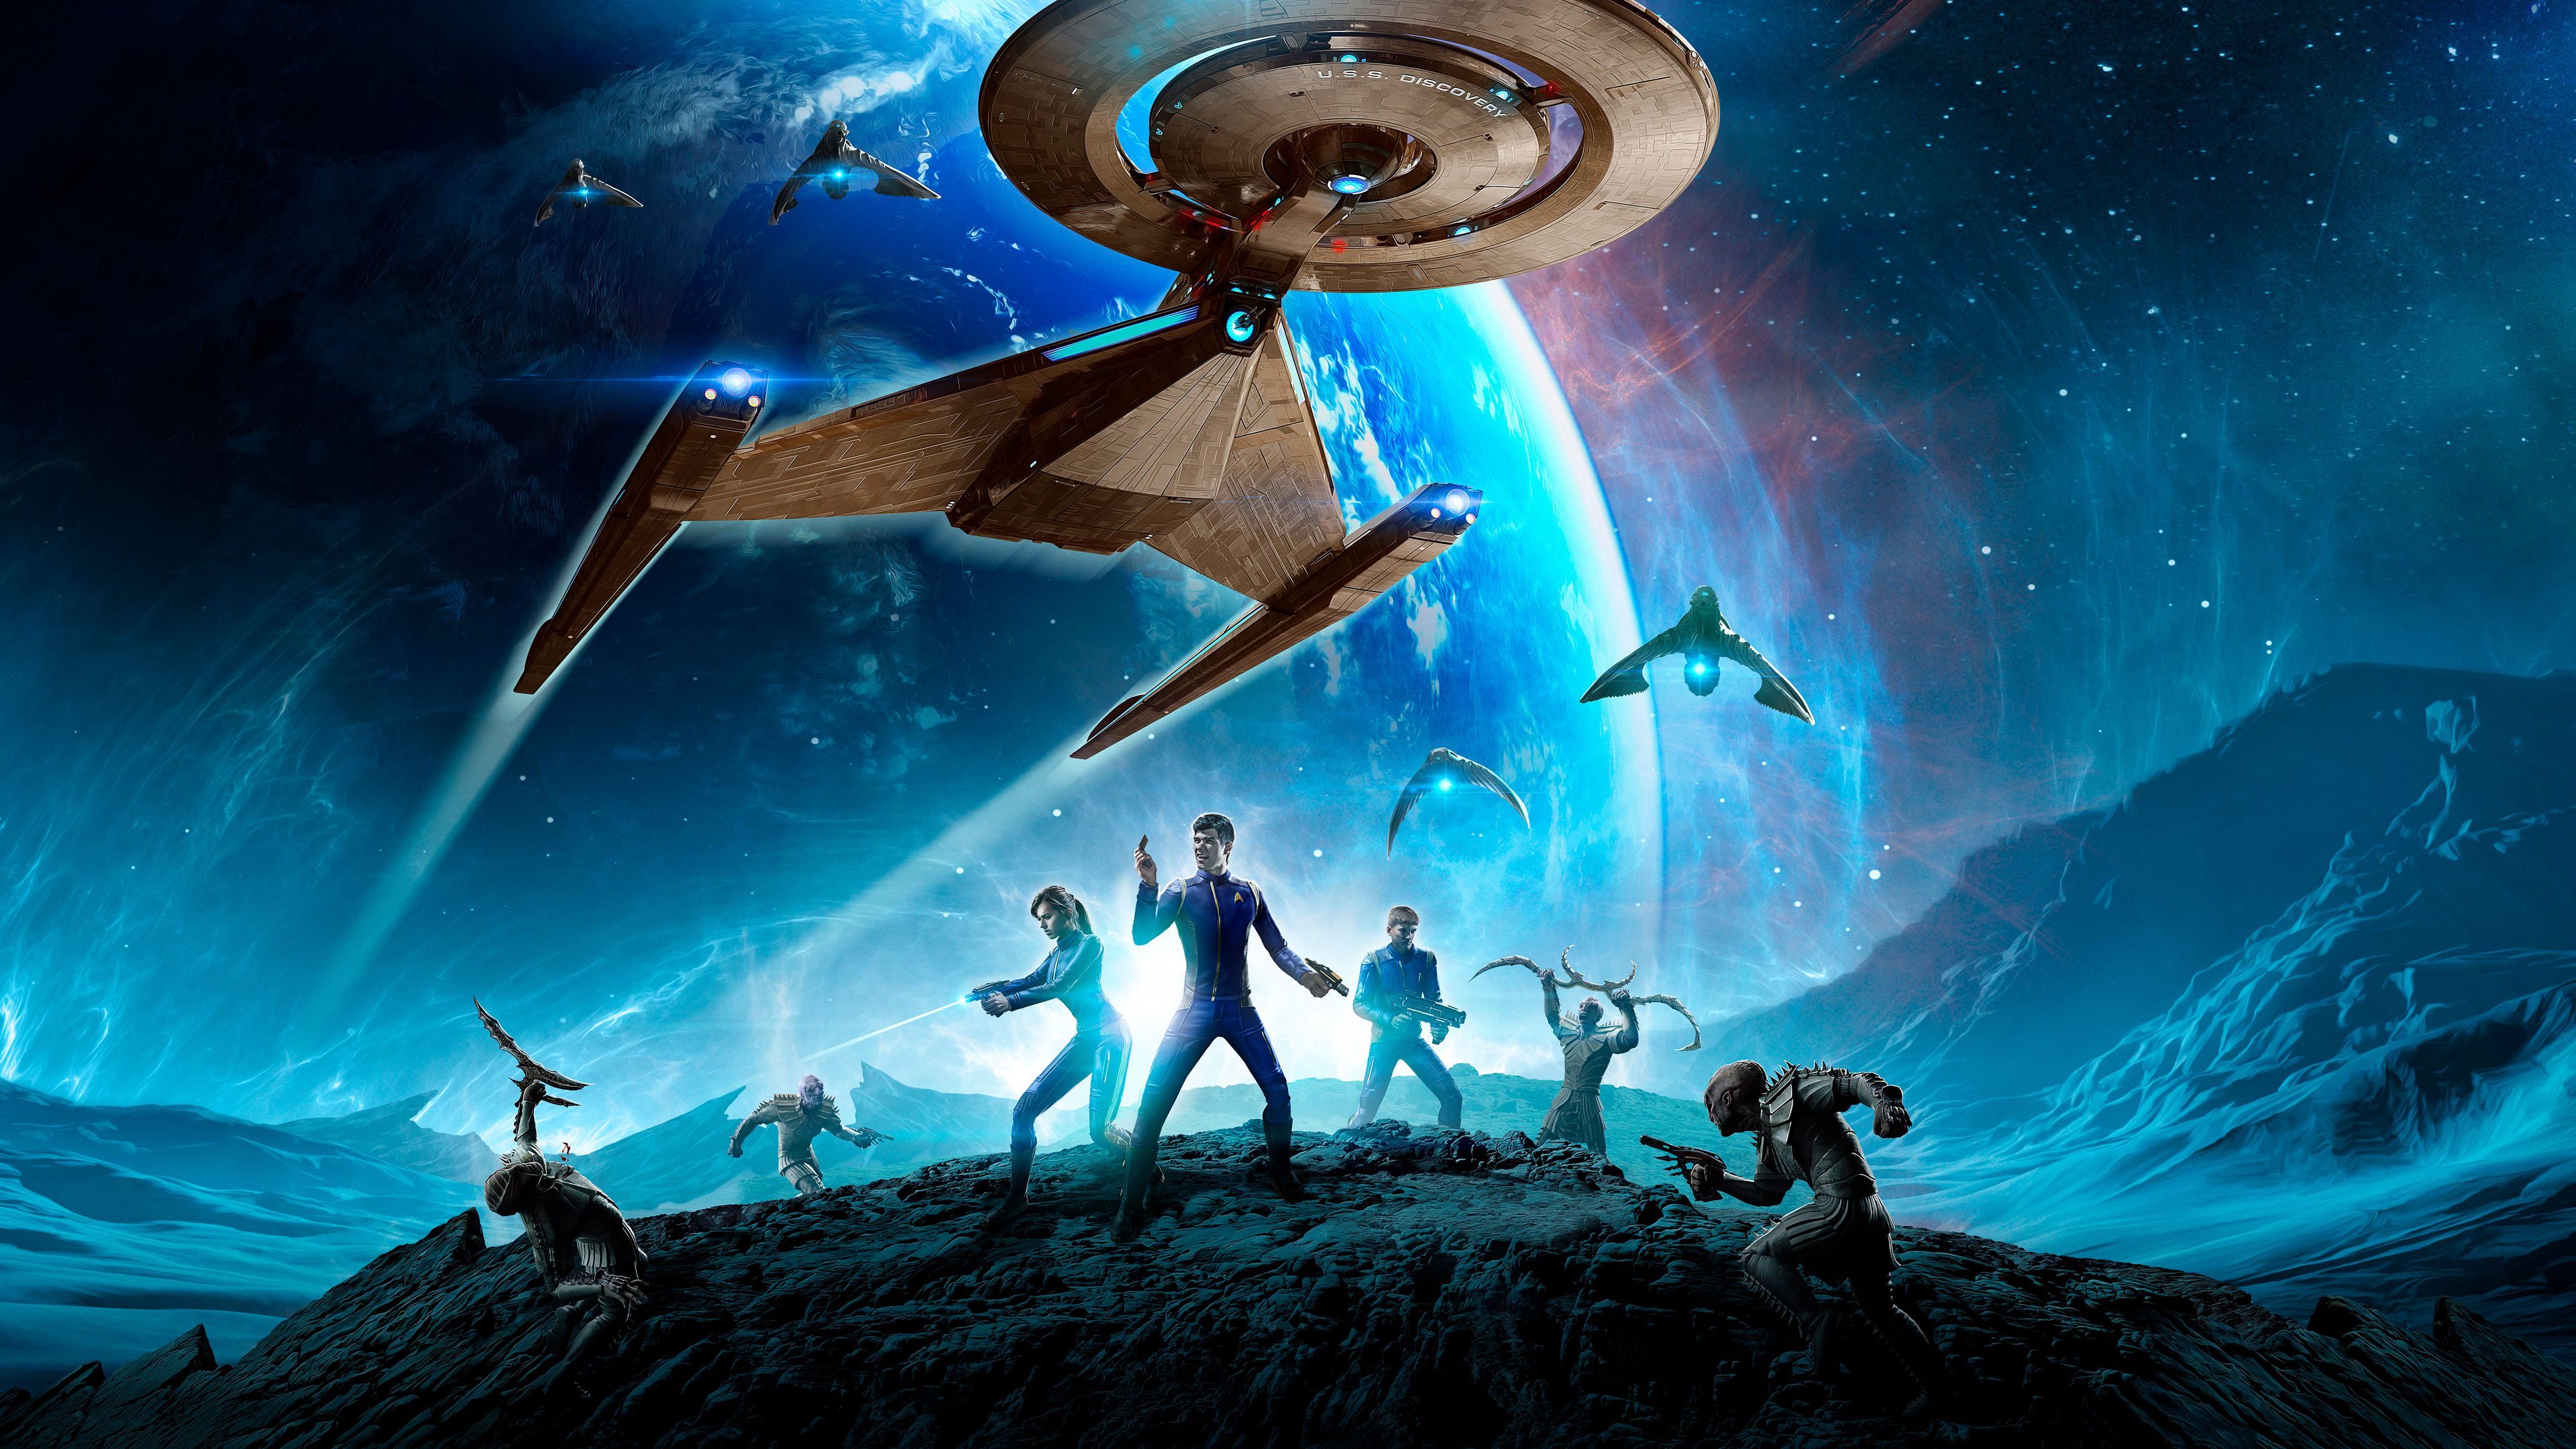 Star Trek Wallpapers HD Free download